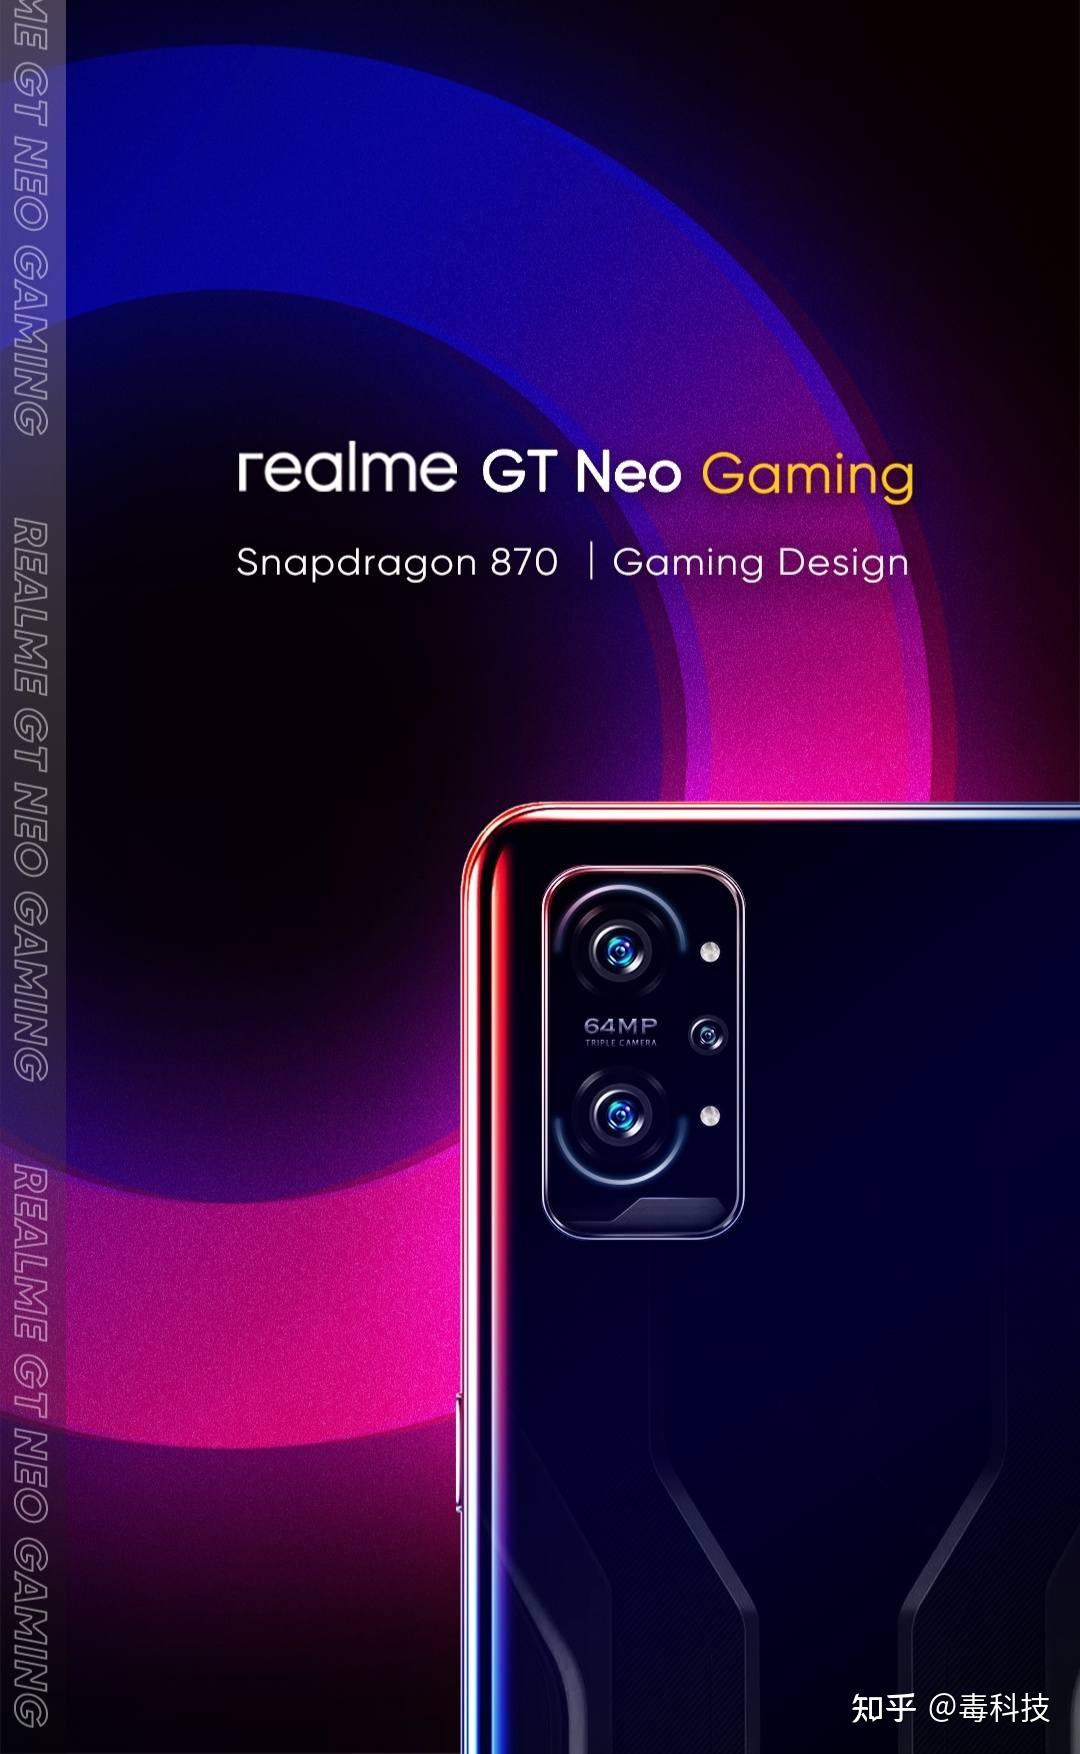 realme即将推出游戏手机了gtneogaming版海外海报曝光